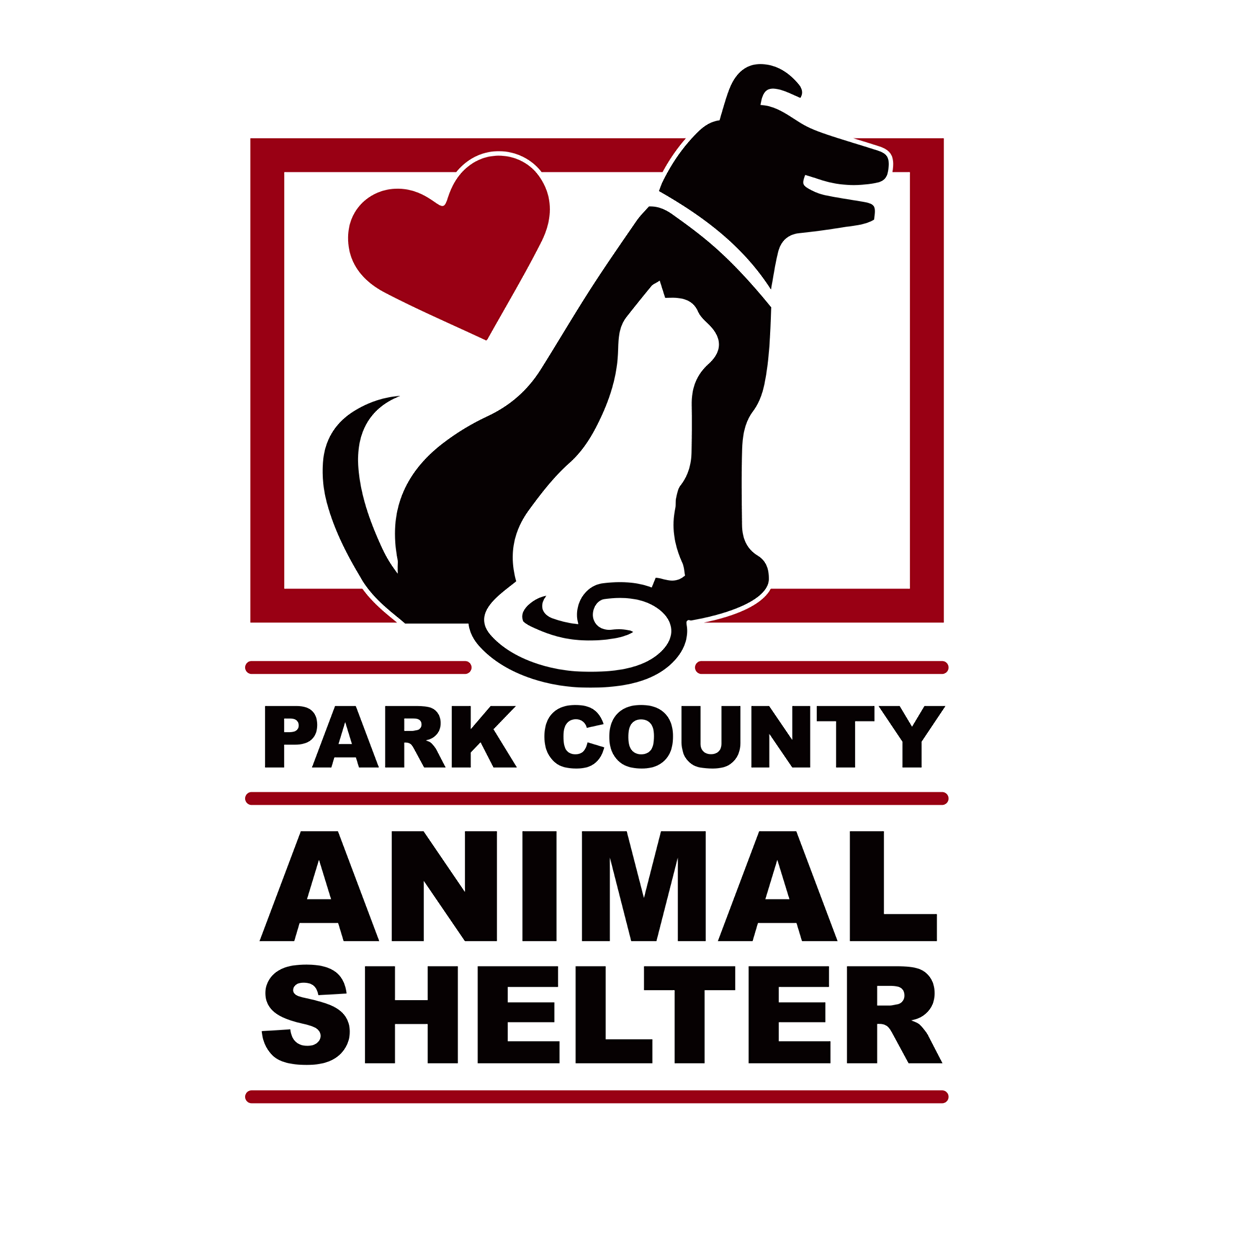 Park County Animal shelter